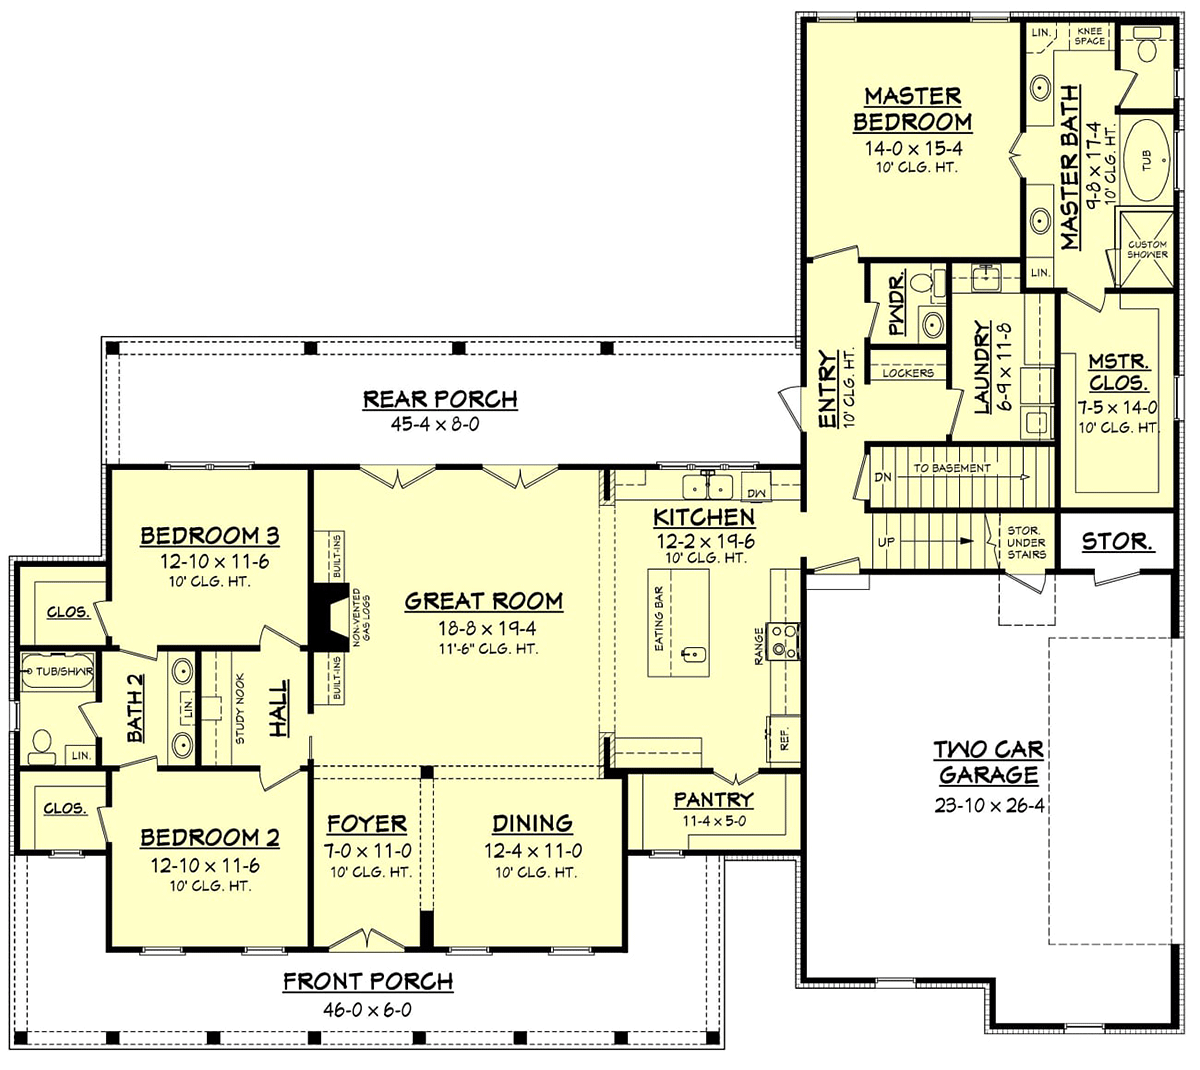 House Plan 56916 Alternate Level One